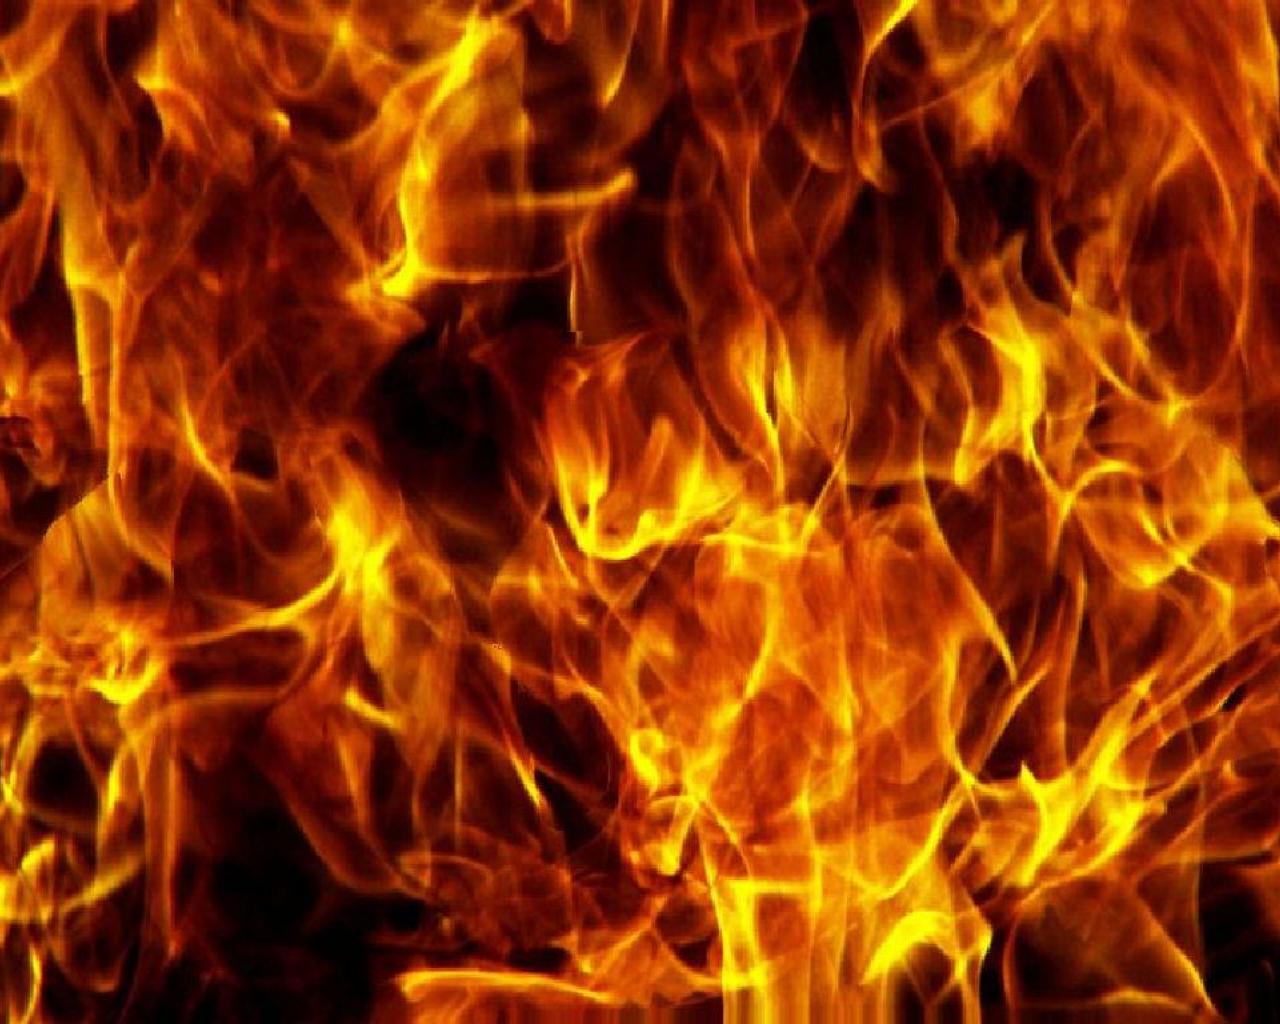 ARTISTIC FLAMES DESK FIRE COOL BACKGROUND HD WALLPAPER